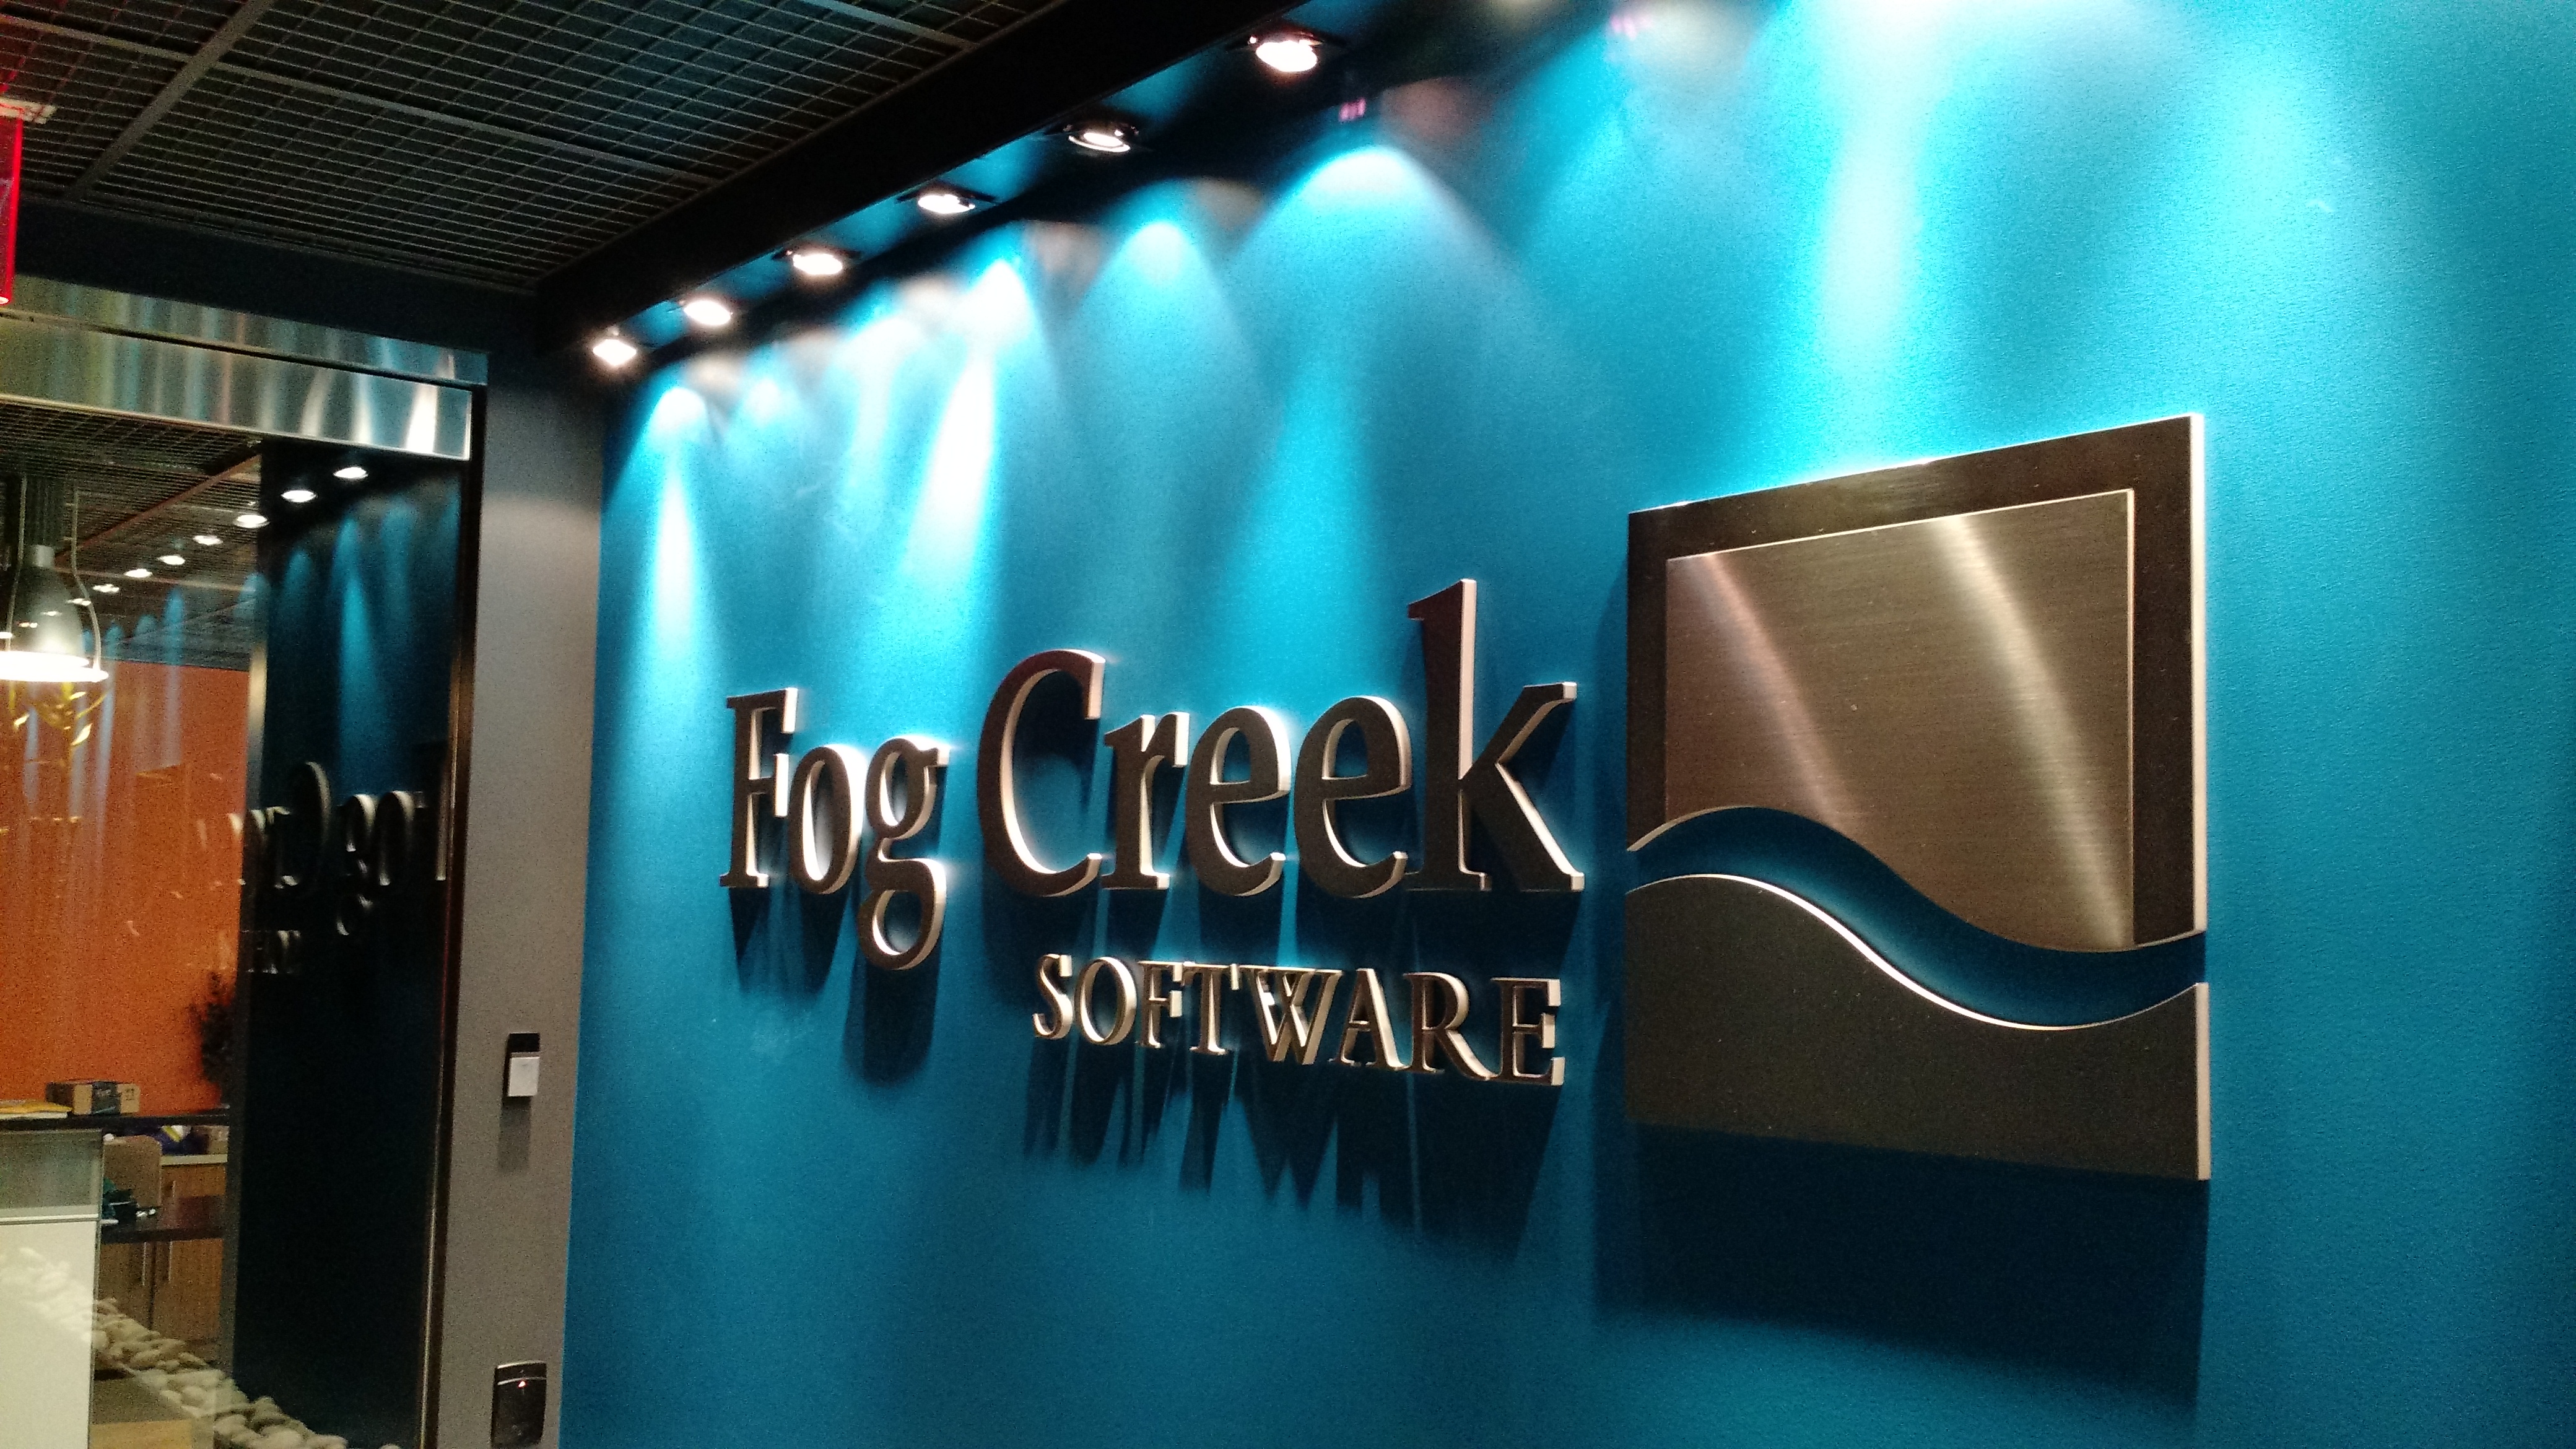 Fog Creek Software headquarters in New York.